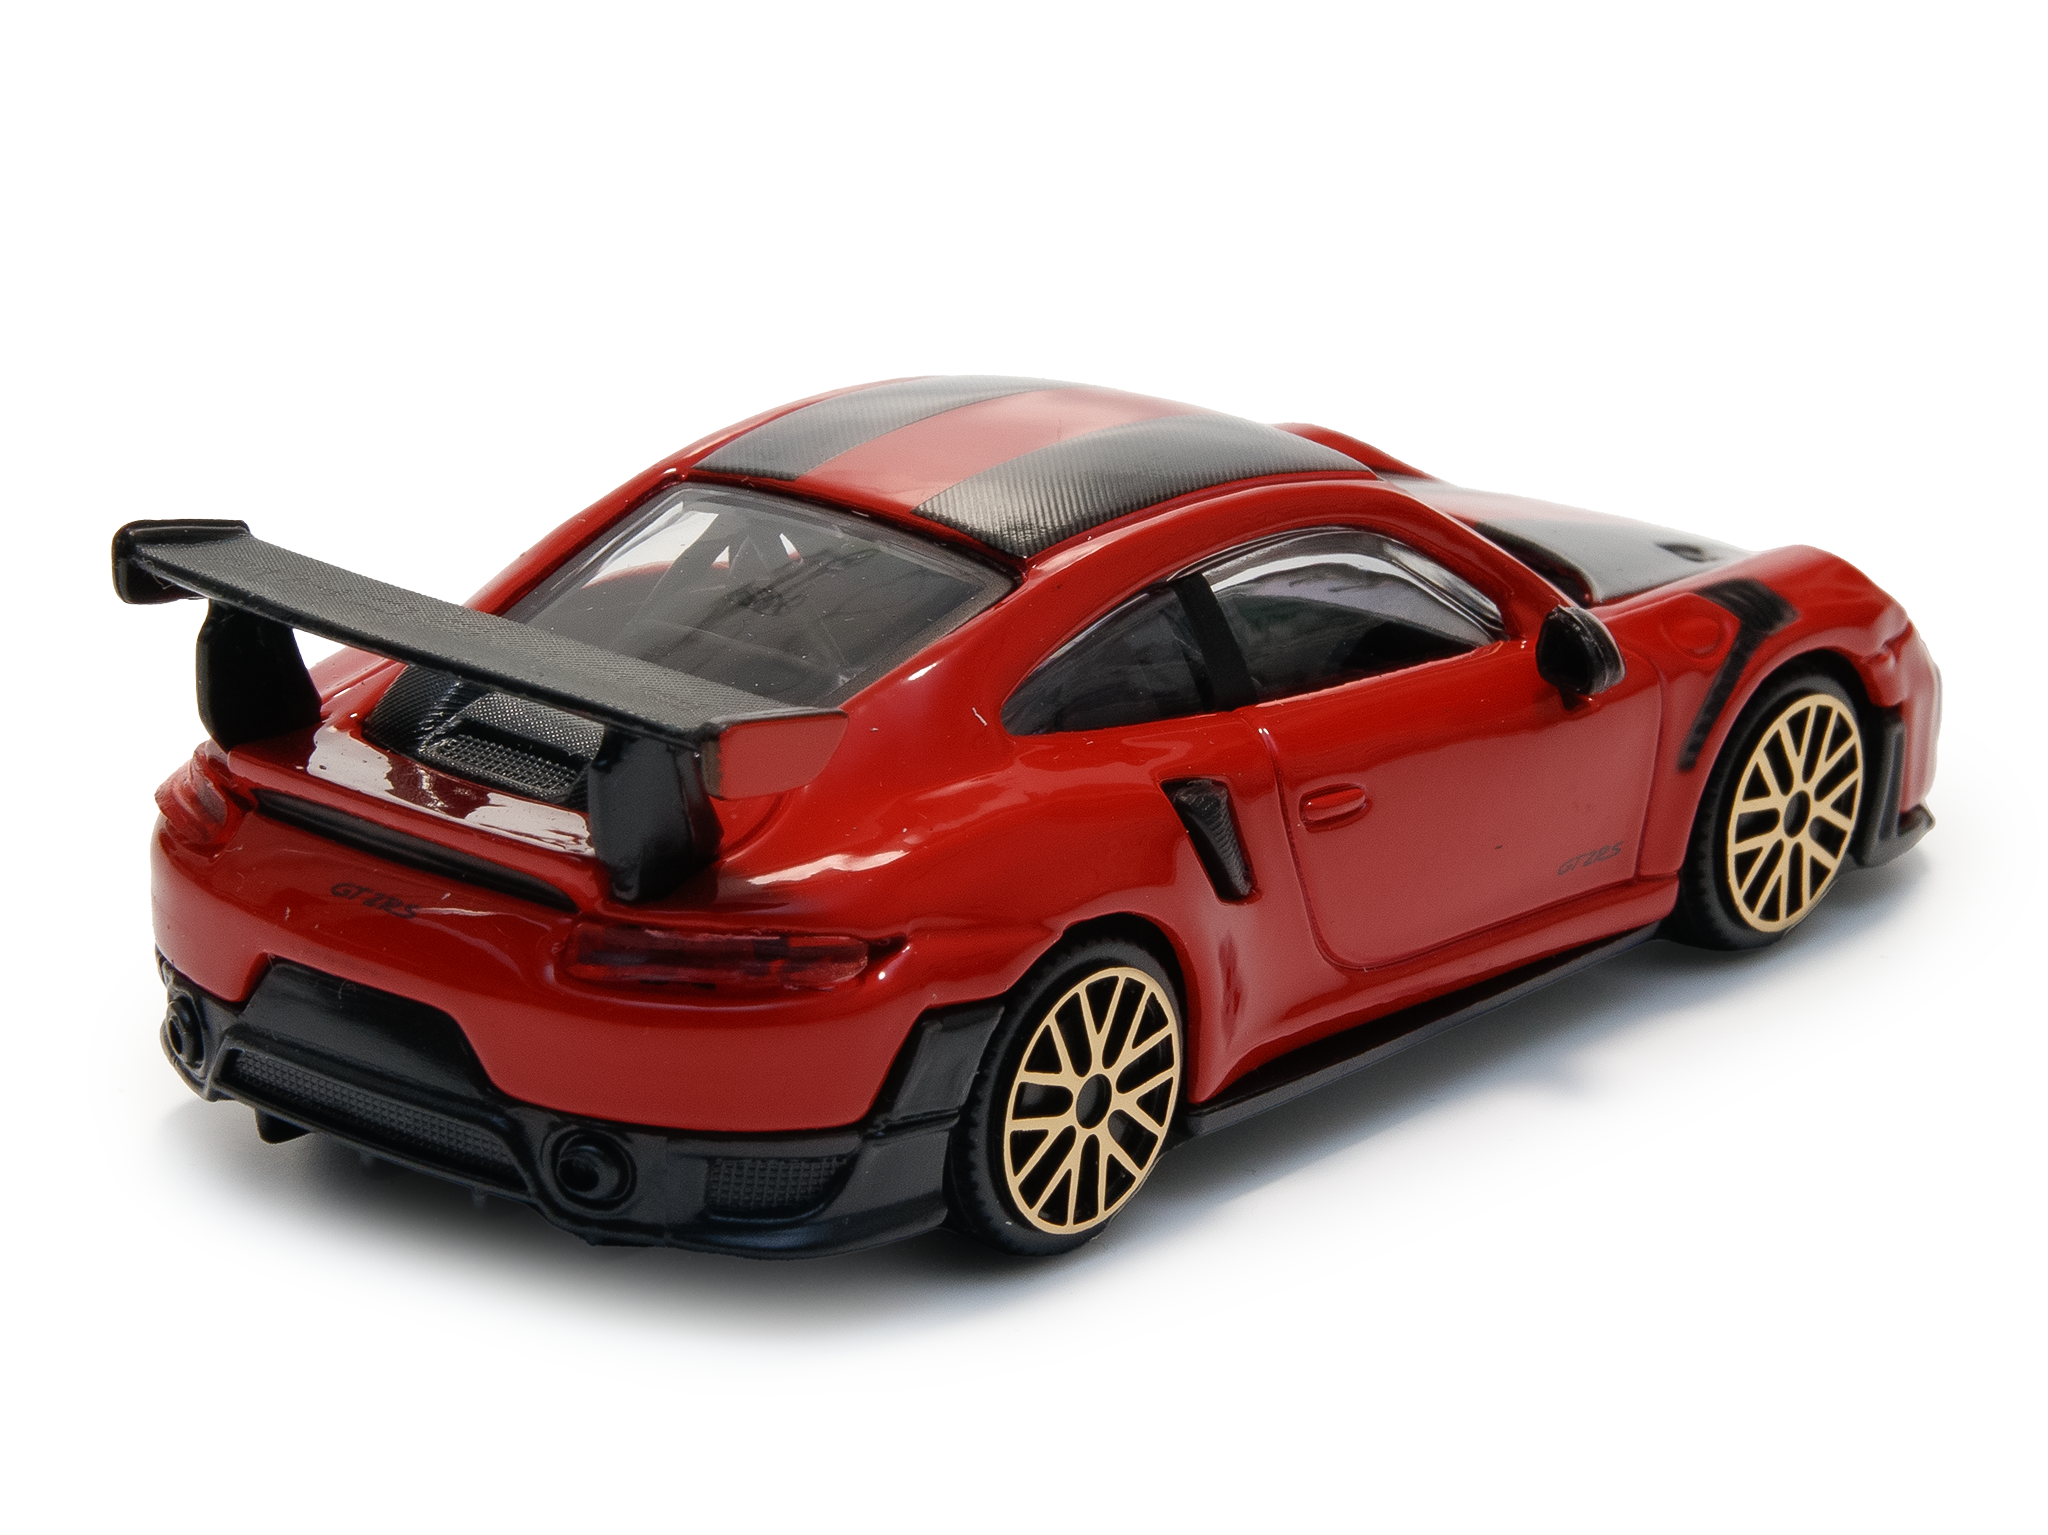 Porsche 911 GT2 RS red - 1:43 Scale Diecast Toy Car